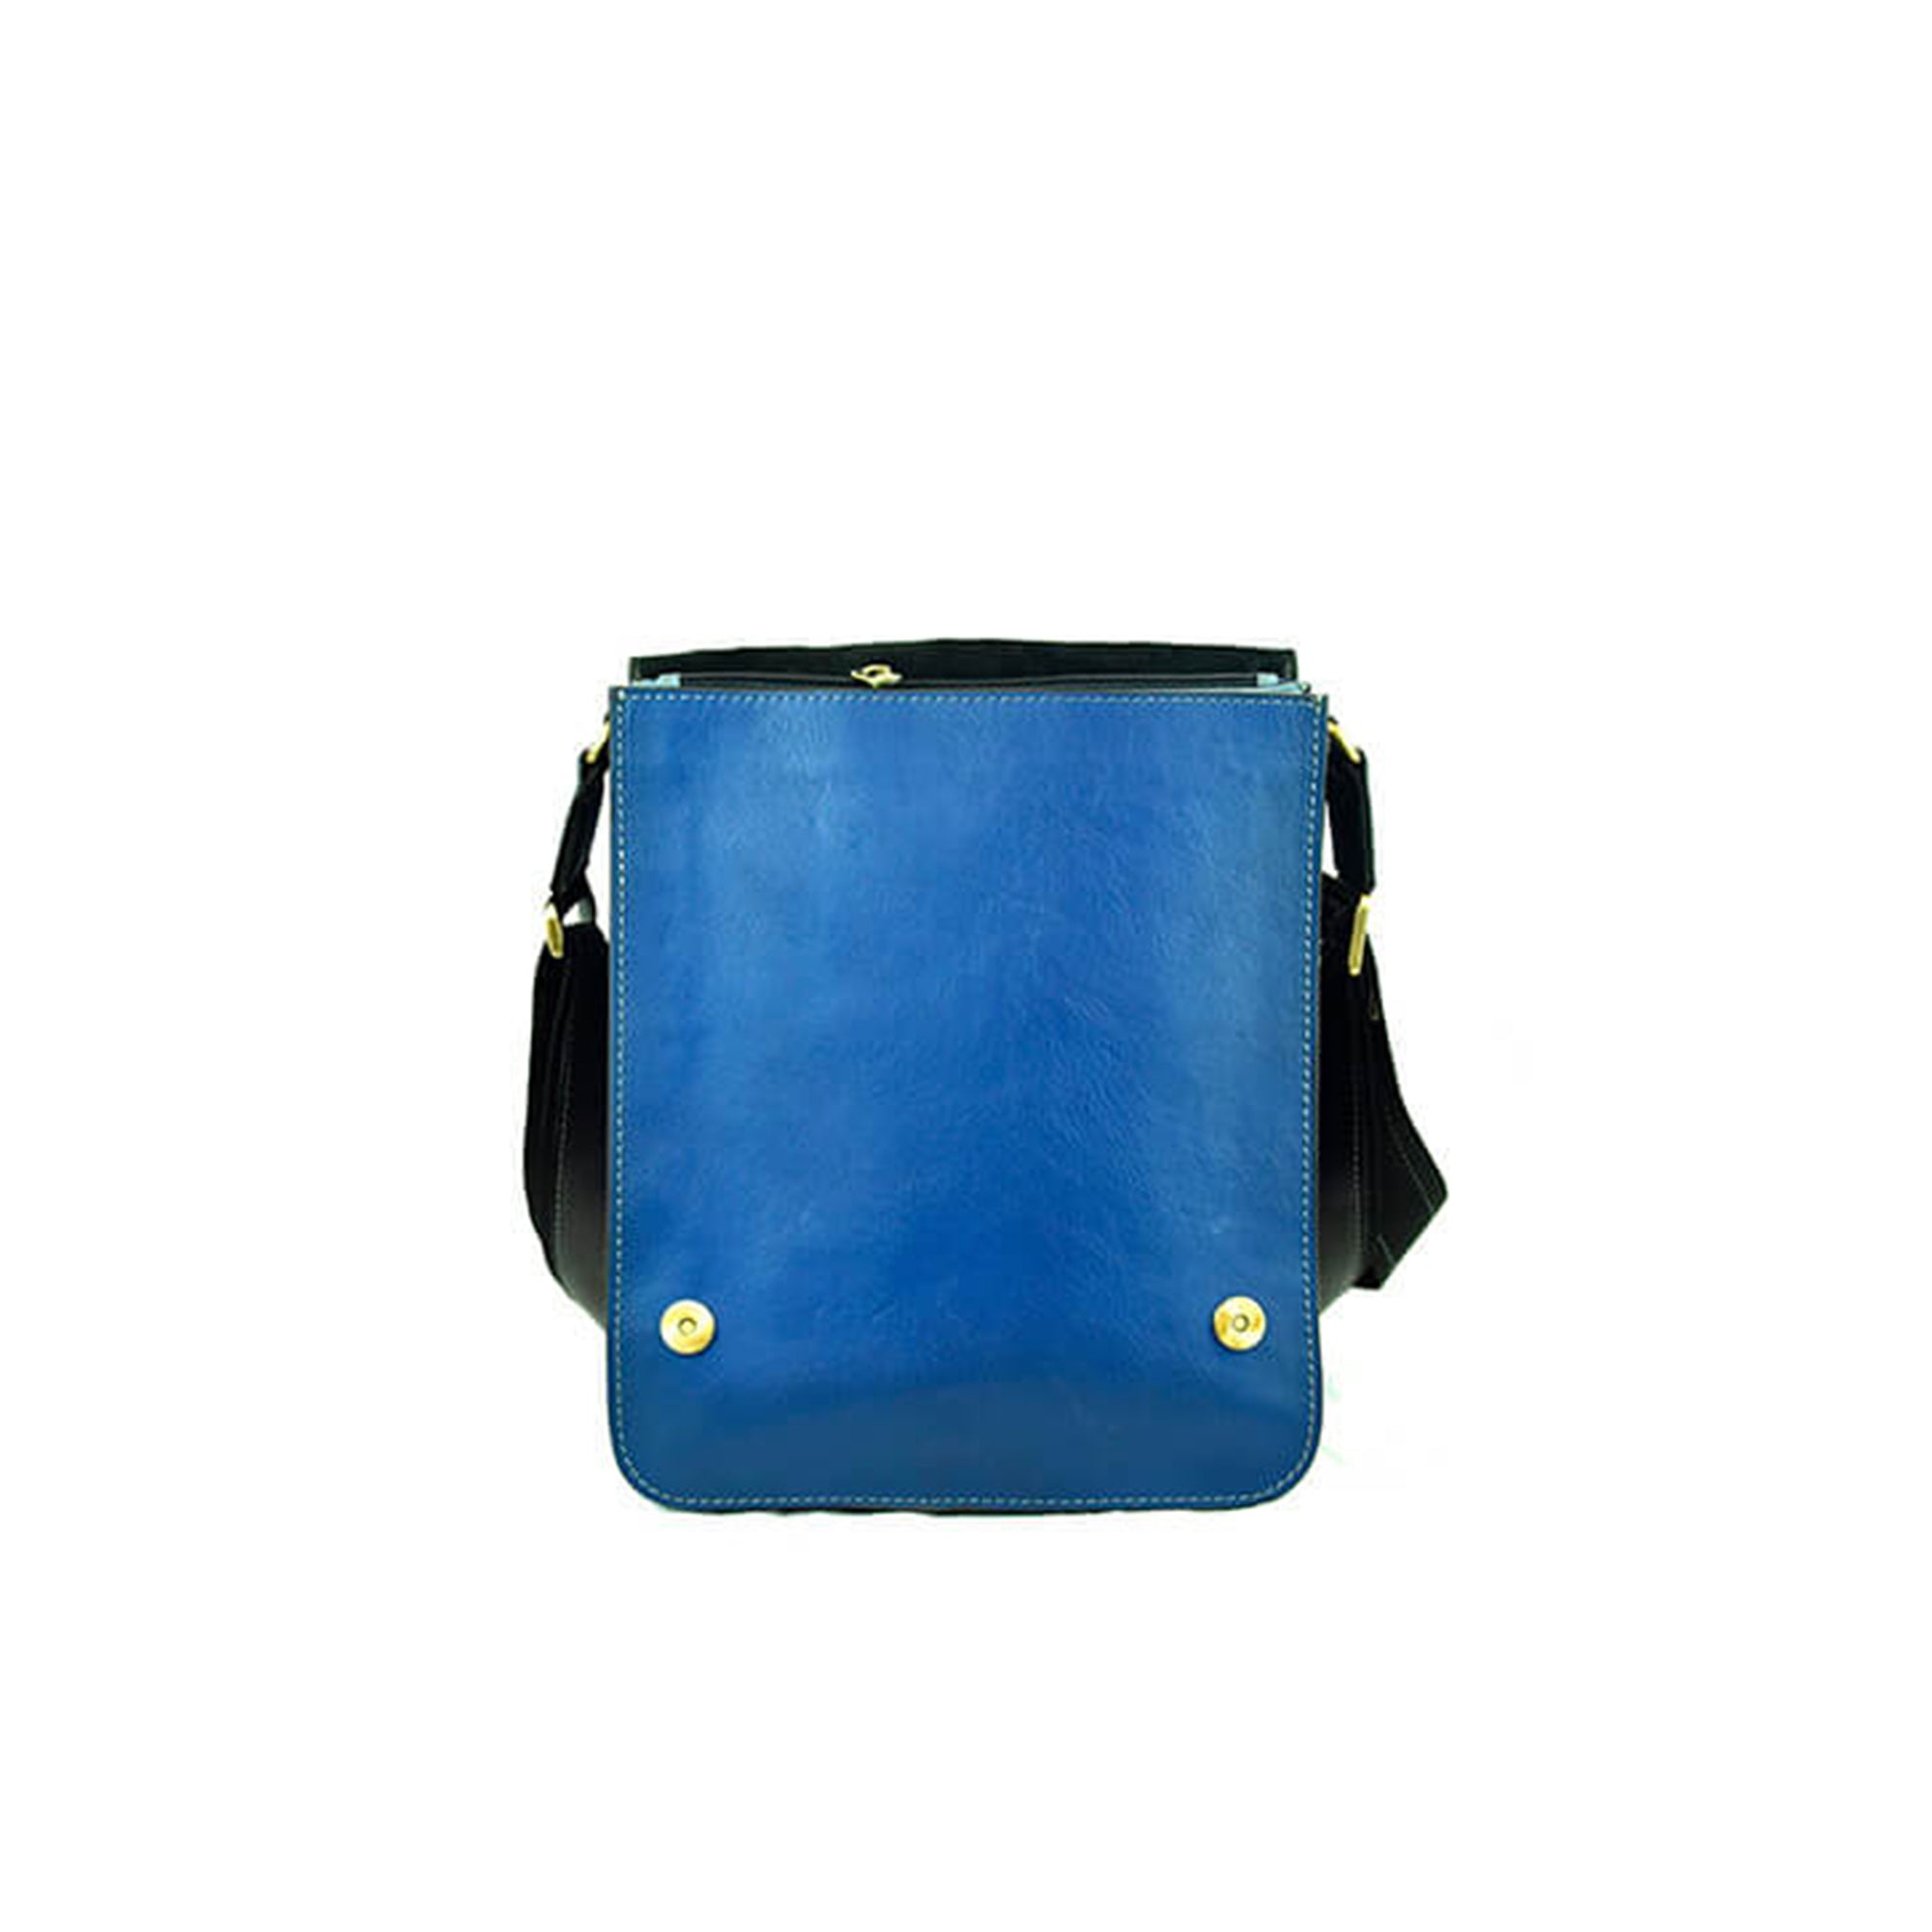 Leather messenger bag 528 light blue - MONDO ITALIA s.r.o.